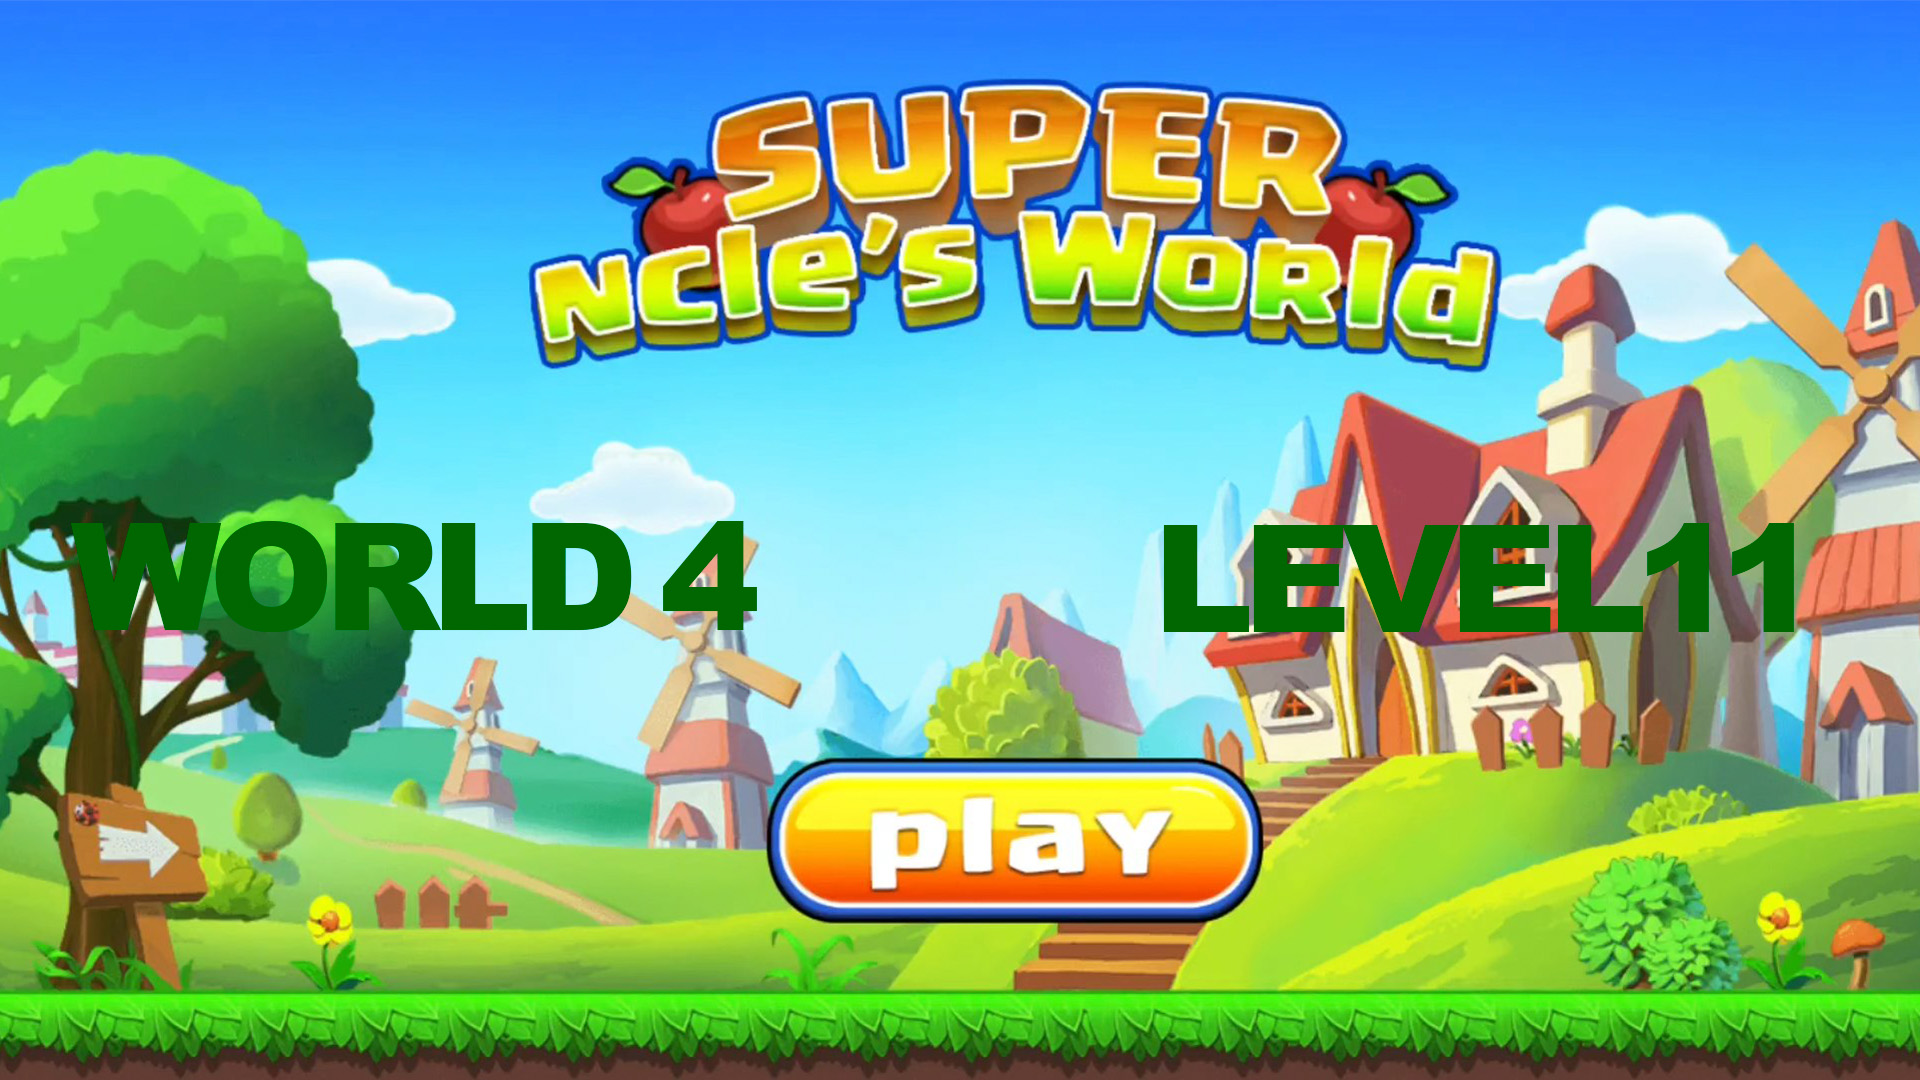 Super ncle's  World 4. Level 11.